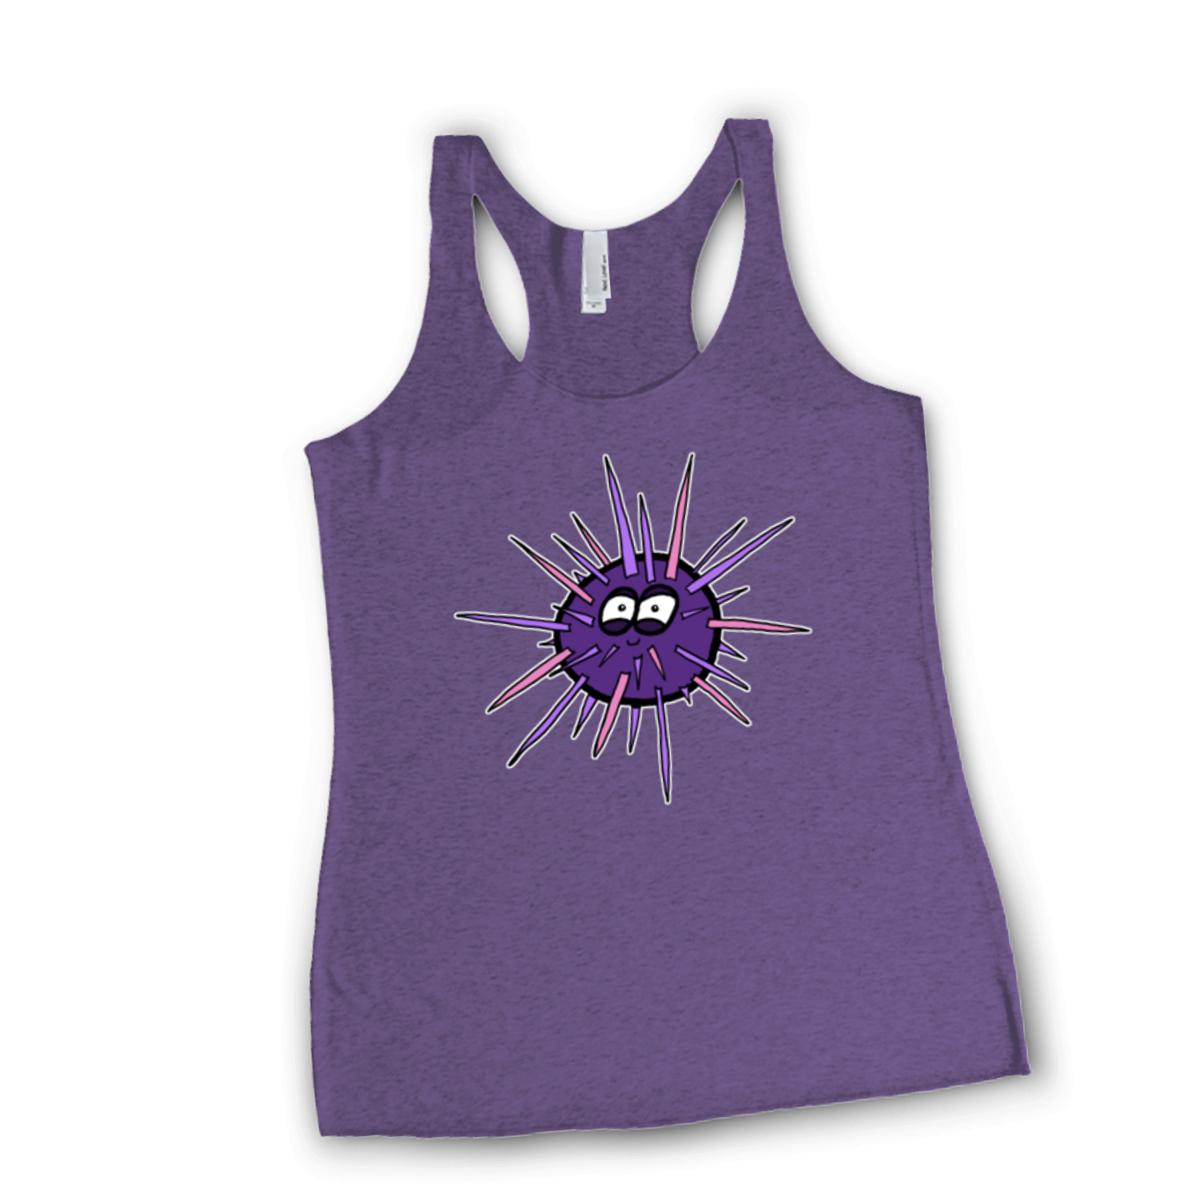 Sea Urchin Ladies' Racerback Tank Medium purple-rush